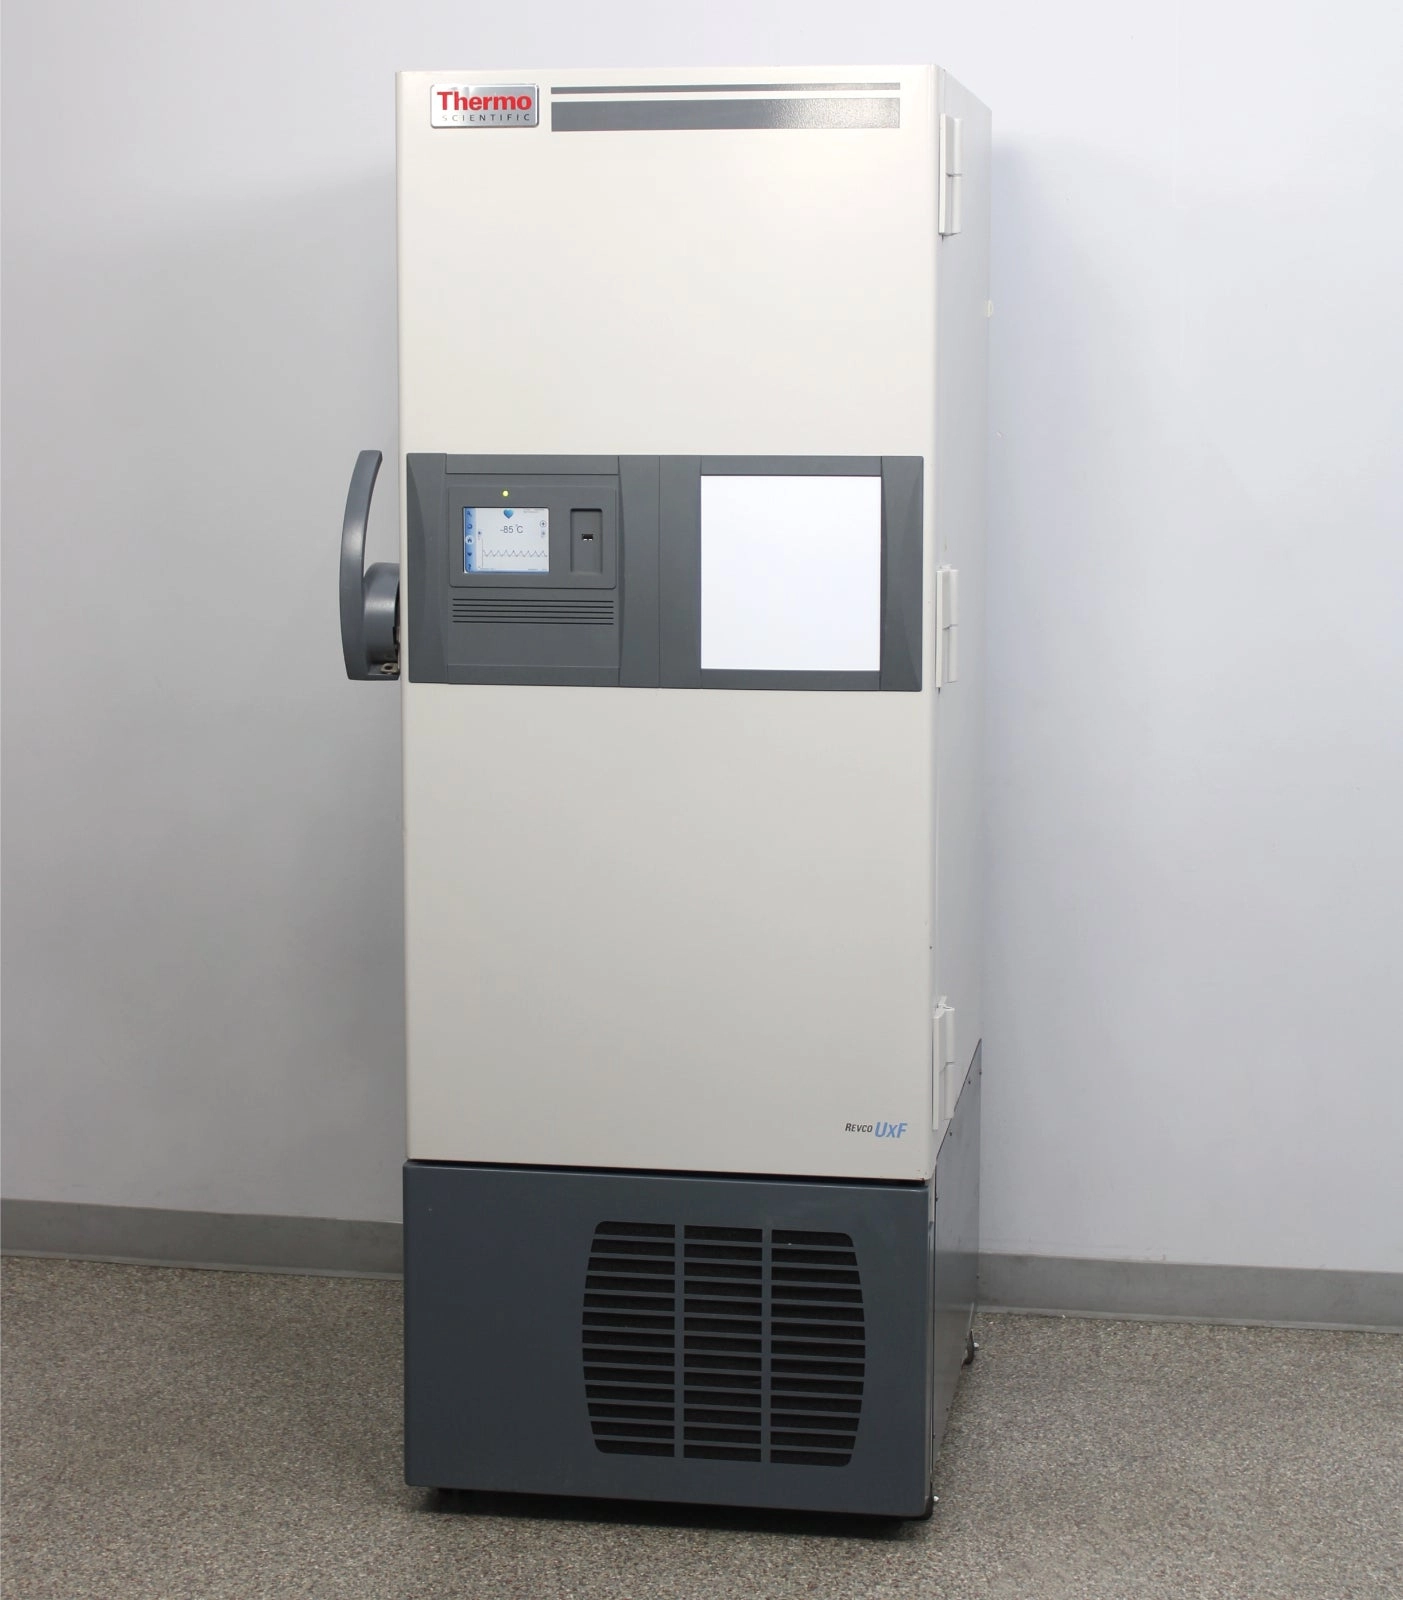 Thermo Revco UxF -86&deg;C UXF40086A Upright ULT Ultra-Low Temperature Freezer